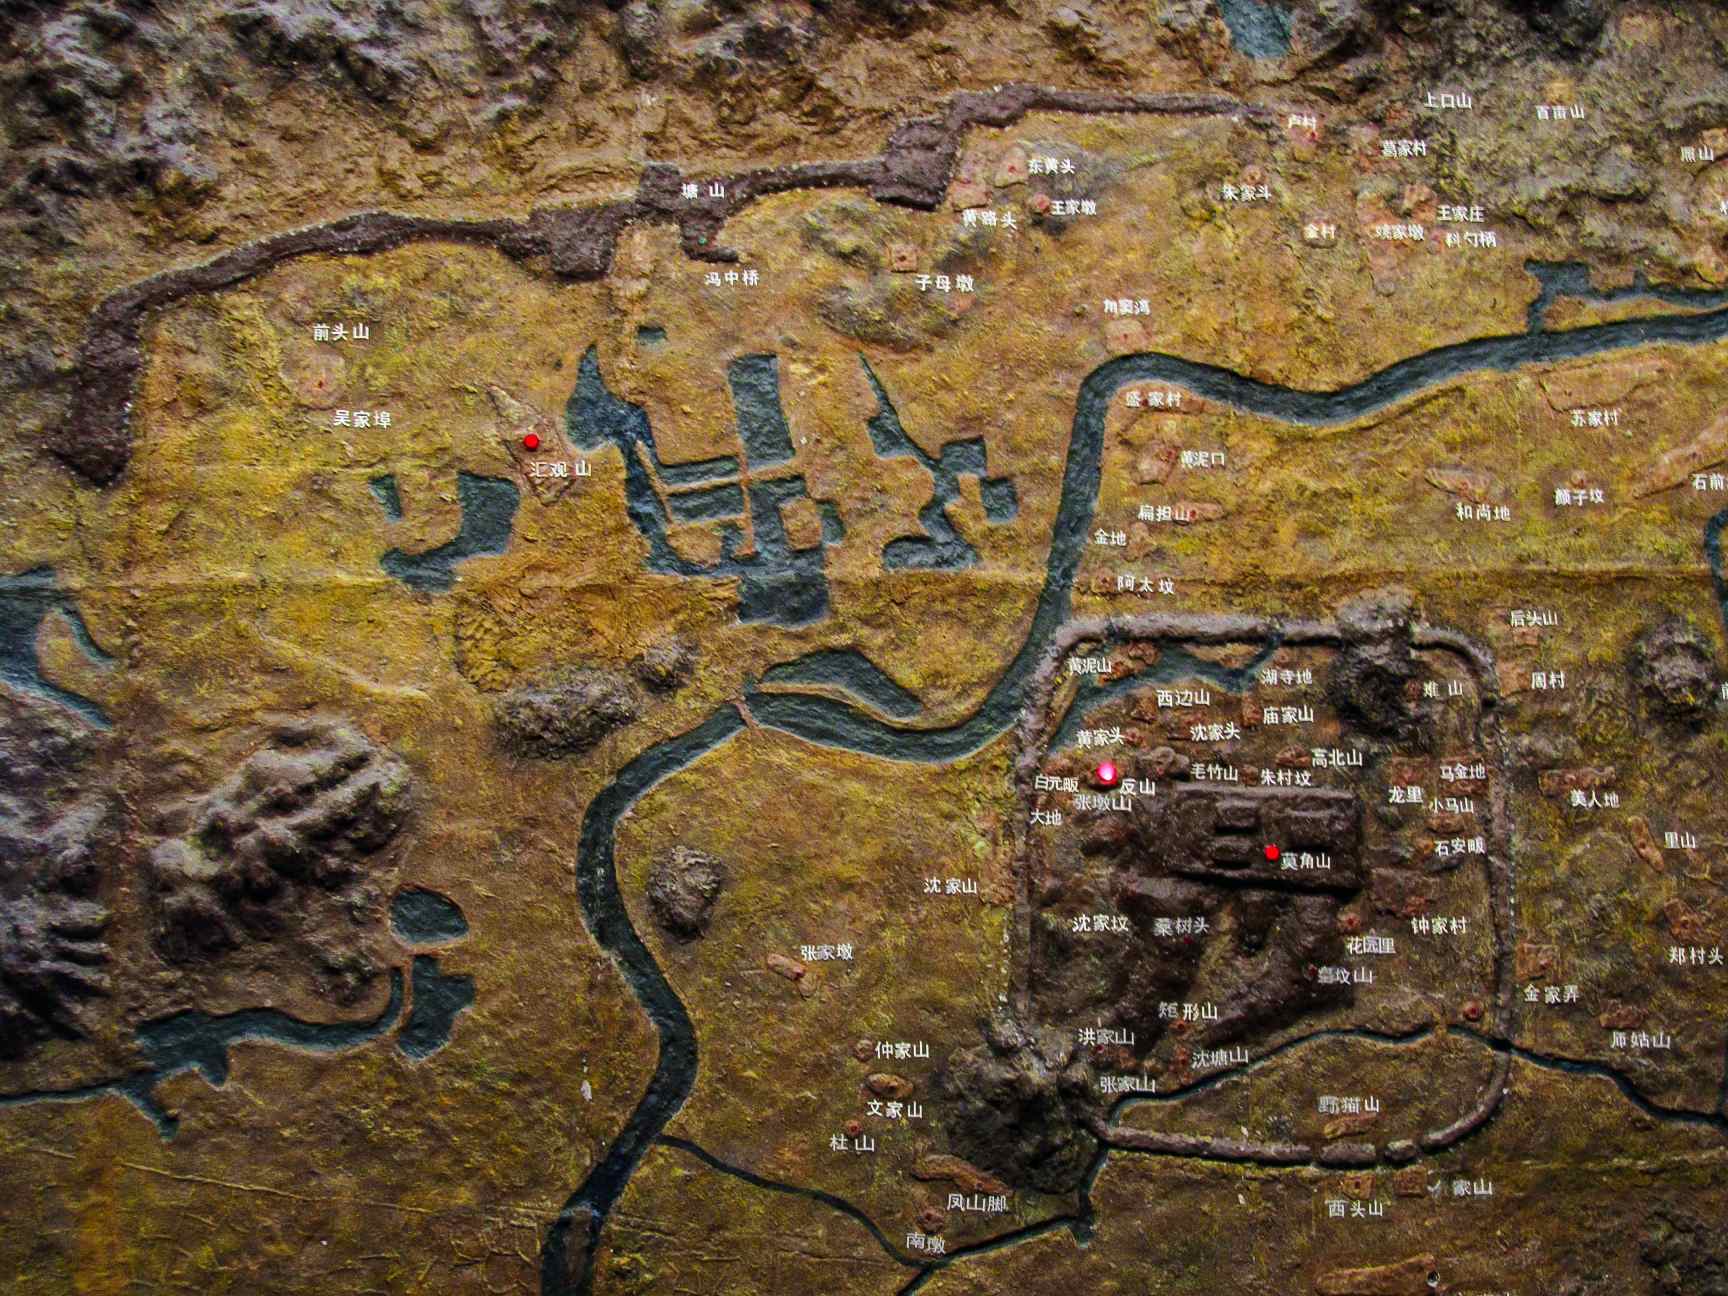 Liangzhu Müzesi'nde sergilenen Liangzhu antik kentinin modeli.